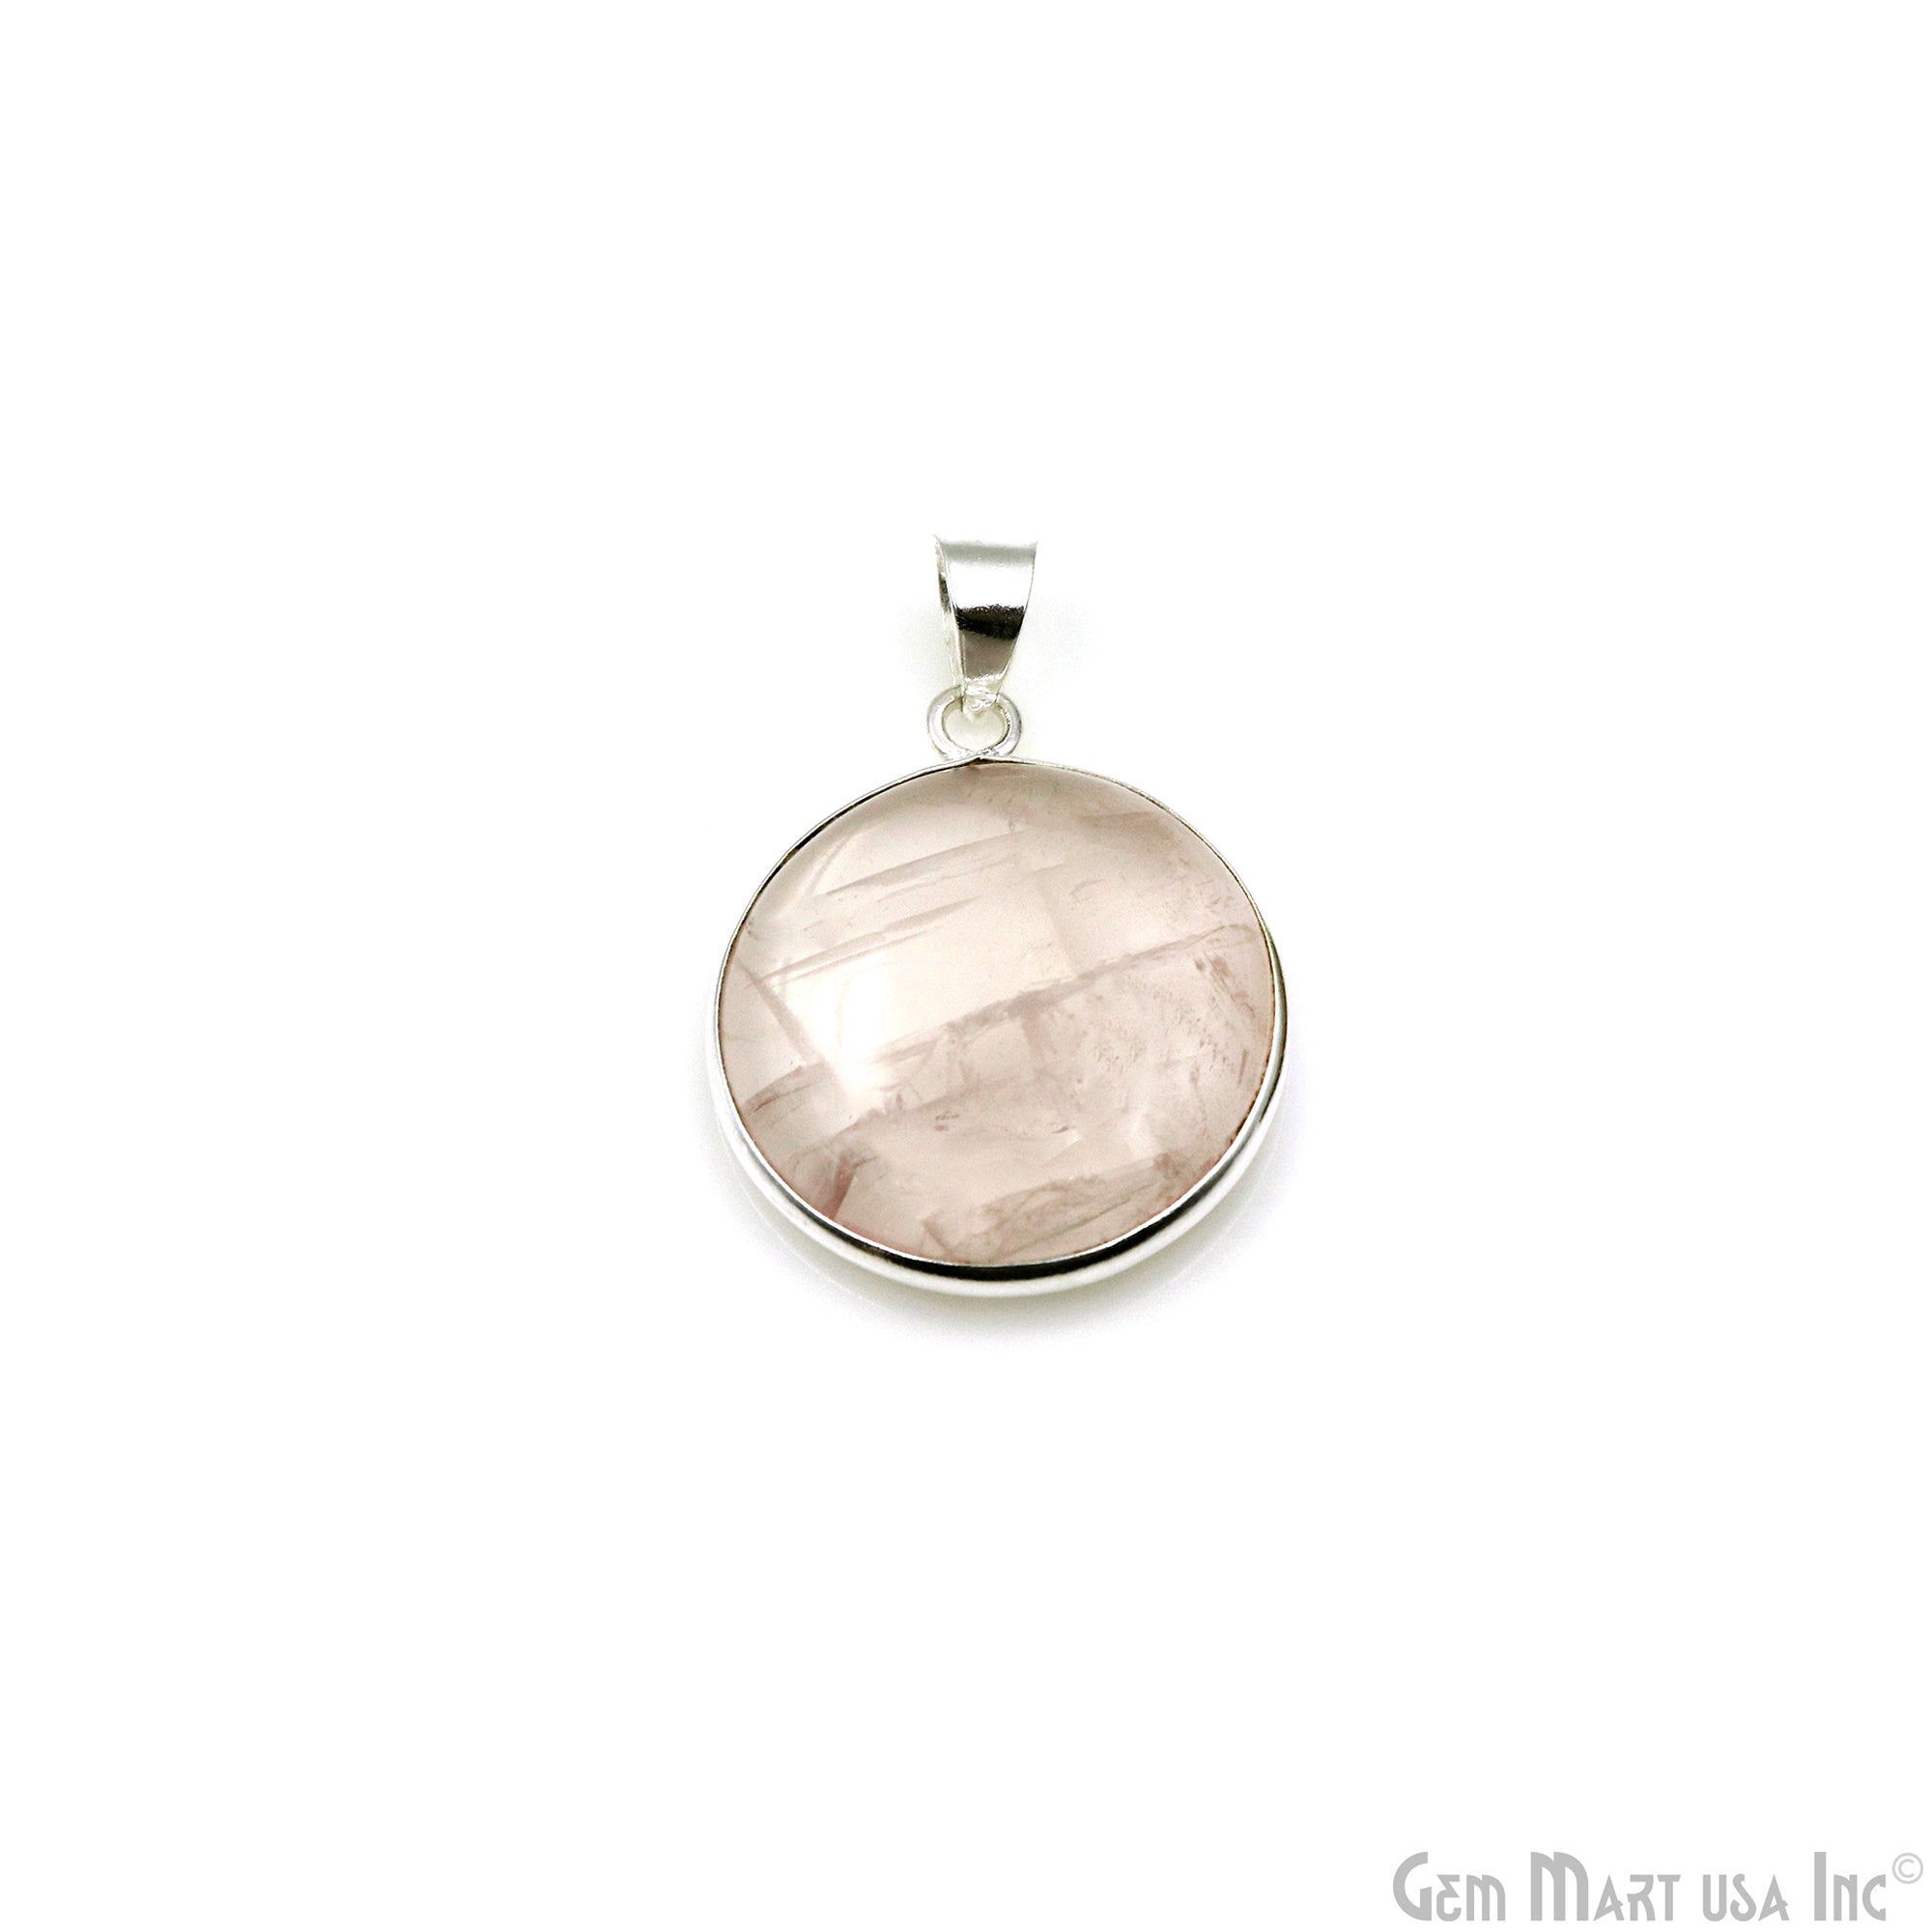 Rose Quartz Gemstone Round 31x26mm Sterling Silver Necklace Pendant 1PC